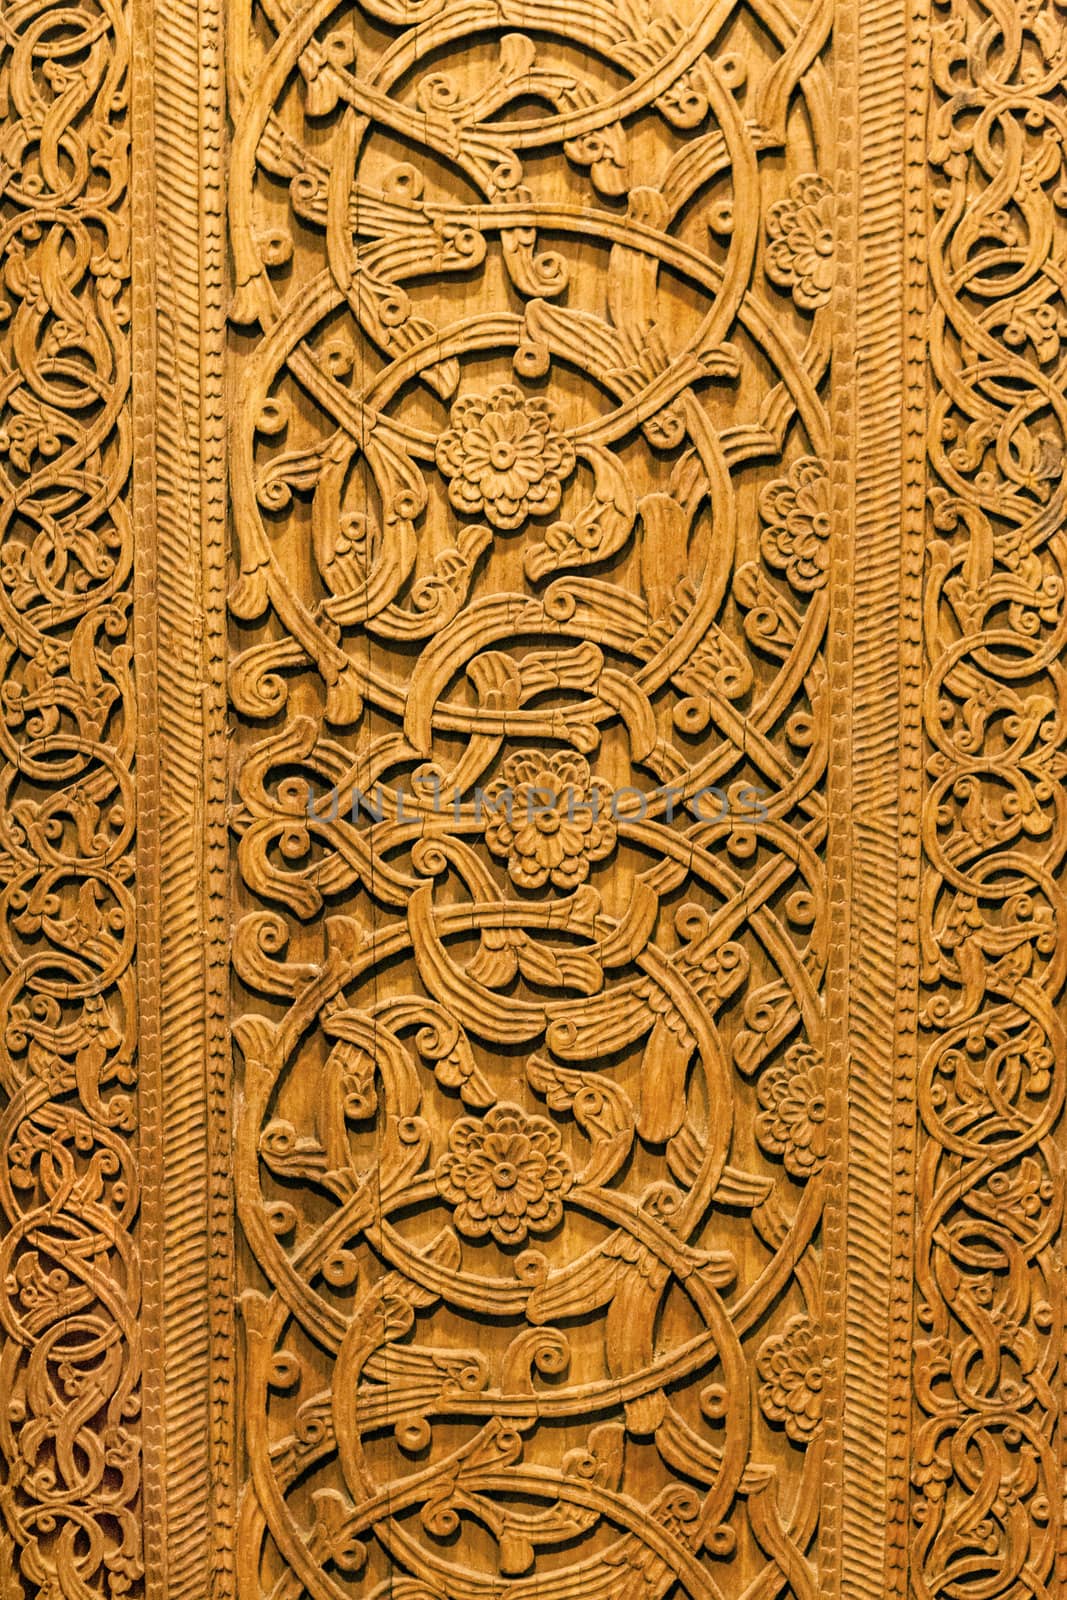 Wood wood carvings by gilmanshin